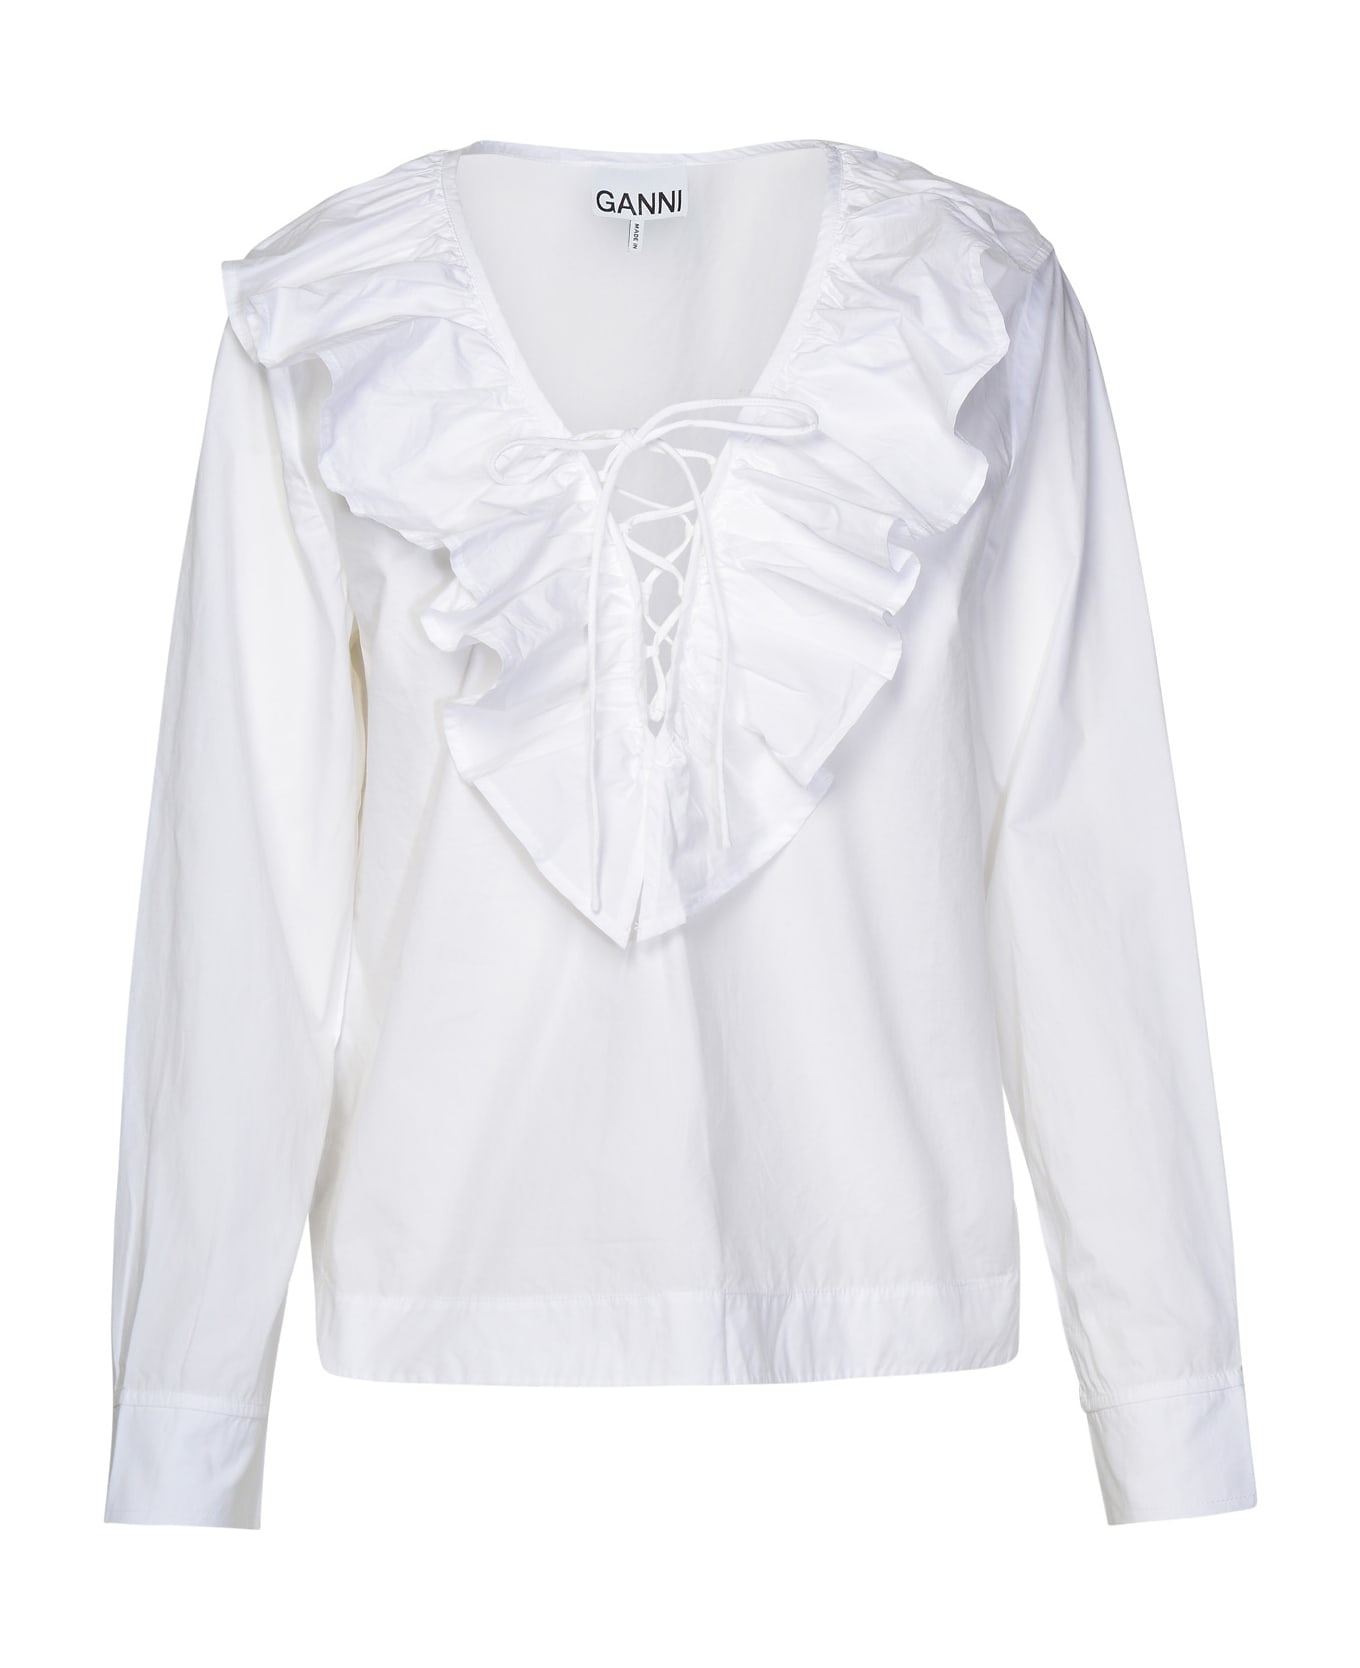 Ganni White Cotton Shirt - Bianco